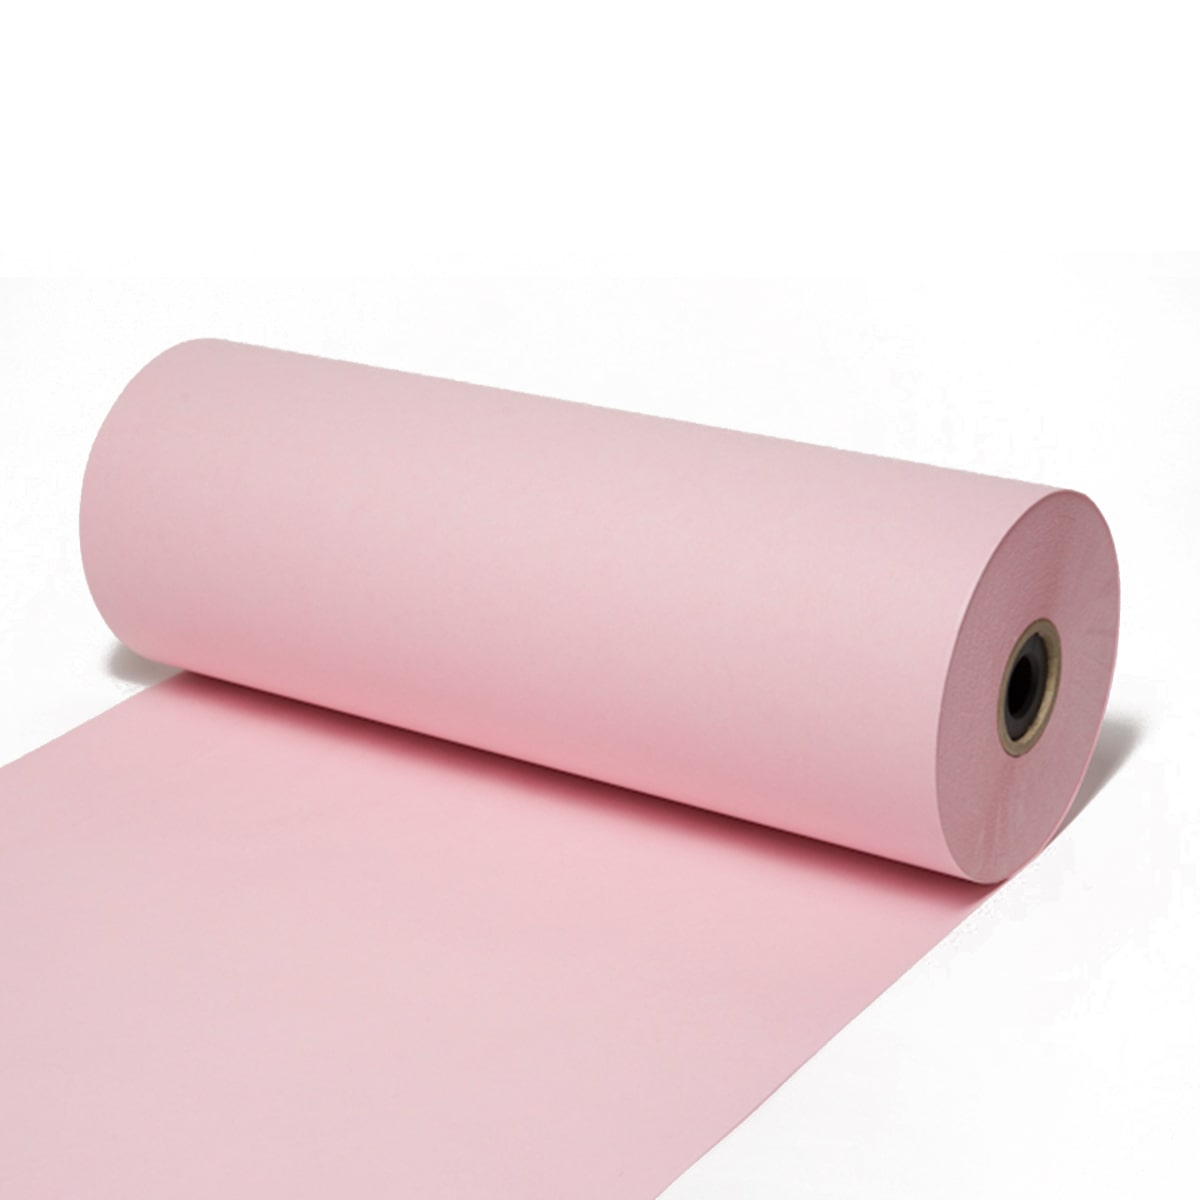 Seidenpapier Rosa, 50 / 75 cm breit, 500 Meter / Rolle